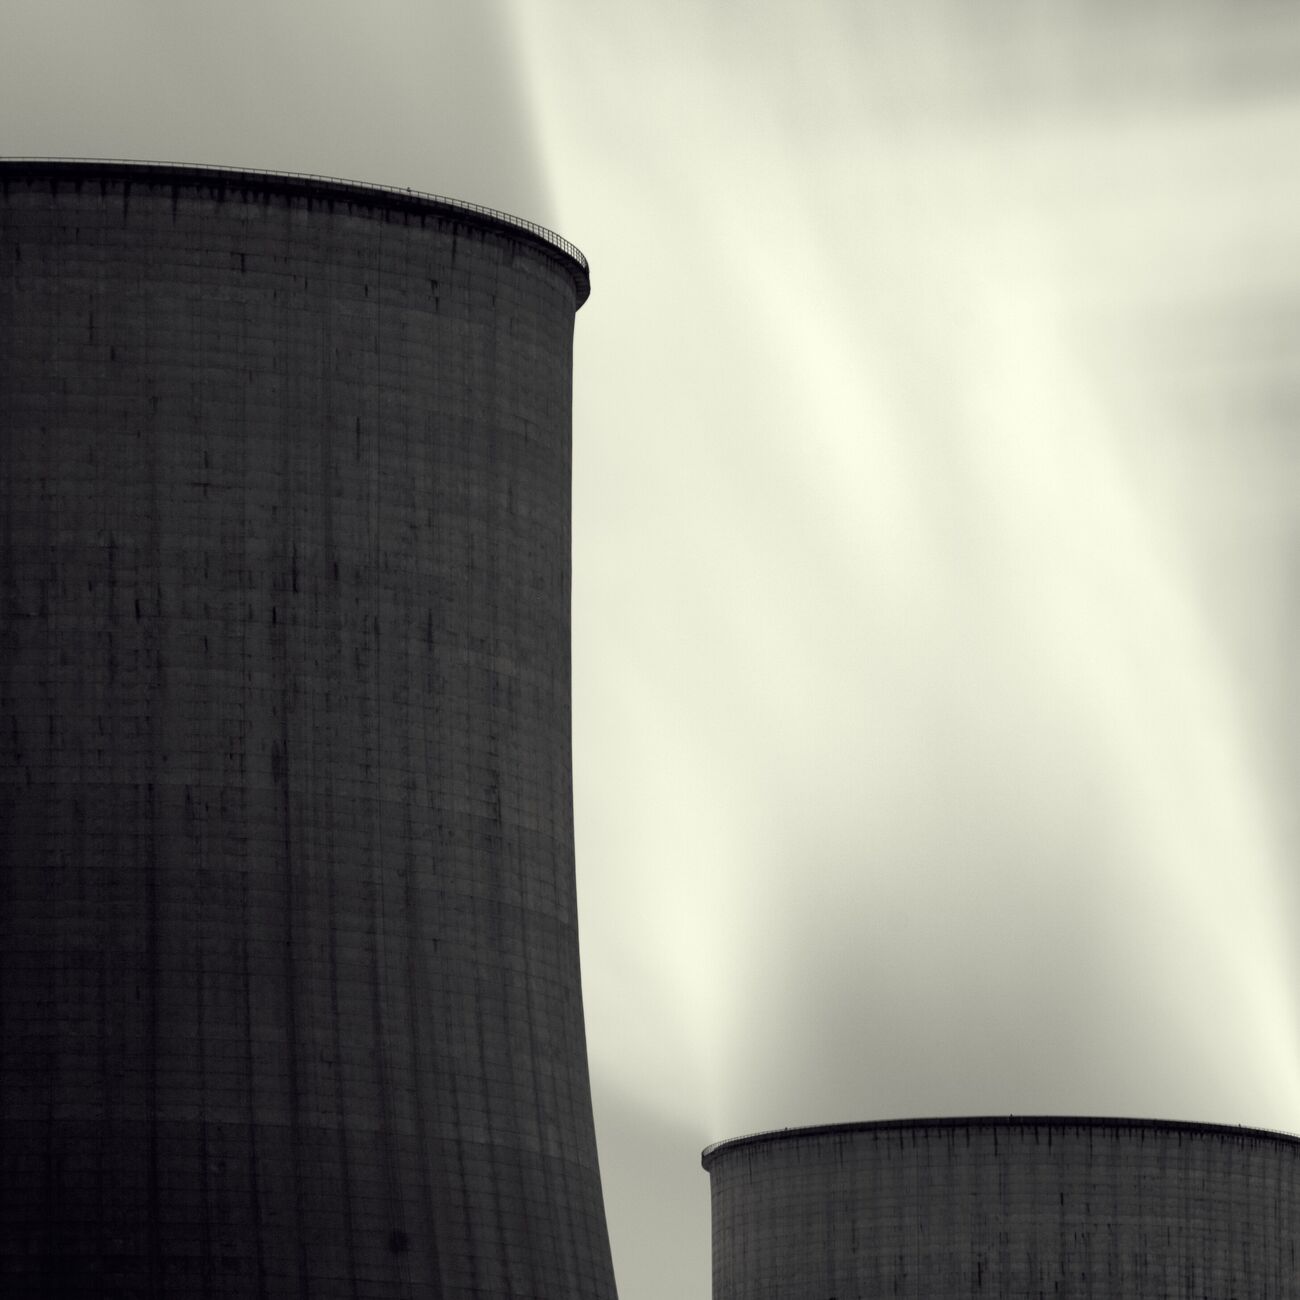 Nuclear Power Plant, Study 4, Golfech, France. Août 2006. Ref-1033 - Denis Olivier Photographie